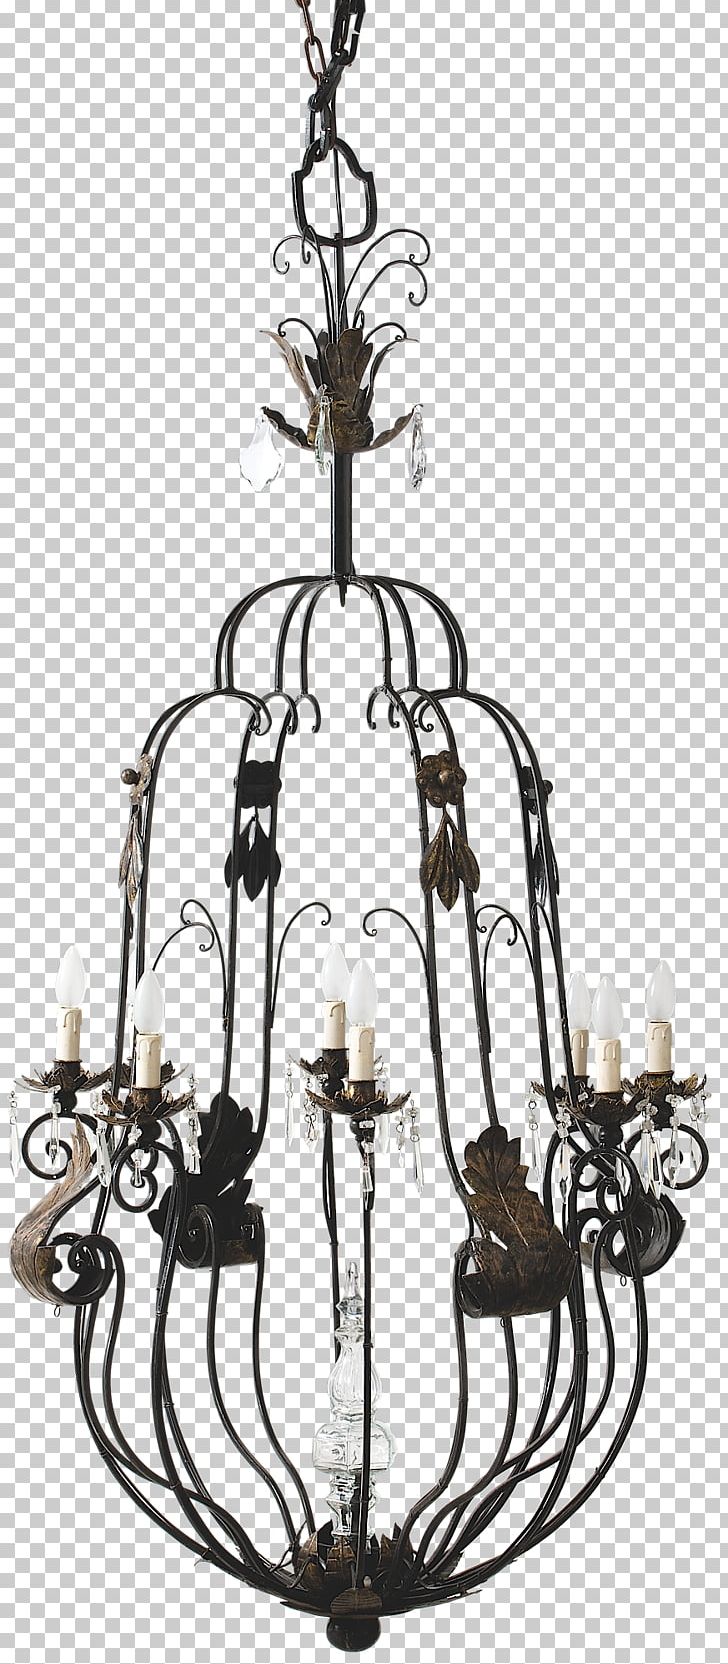 Chandelier France Lamp Ceiling Incandescent Light Bulb PNG, Clipart, Astrid, Ceiling, Ceiling Fixture, Chandelier, Decor Free PNG Download